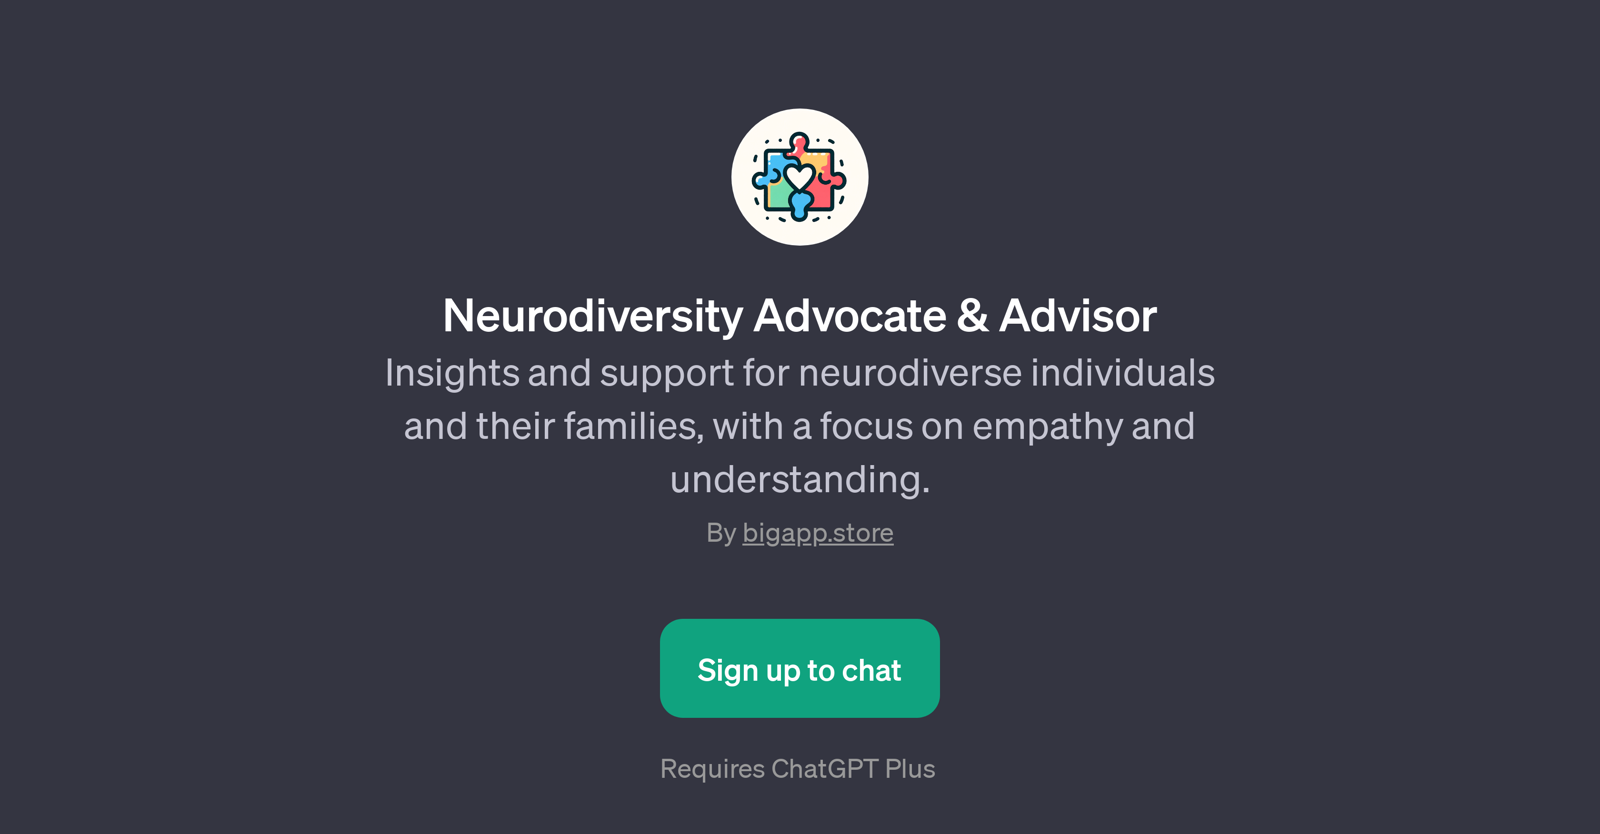 Neurodiversity Advocate & Advisor website